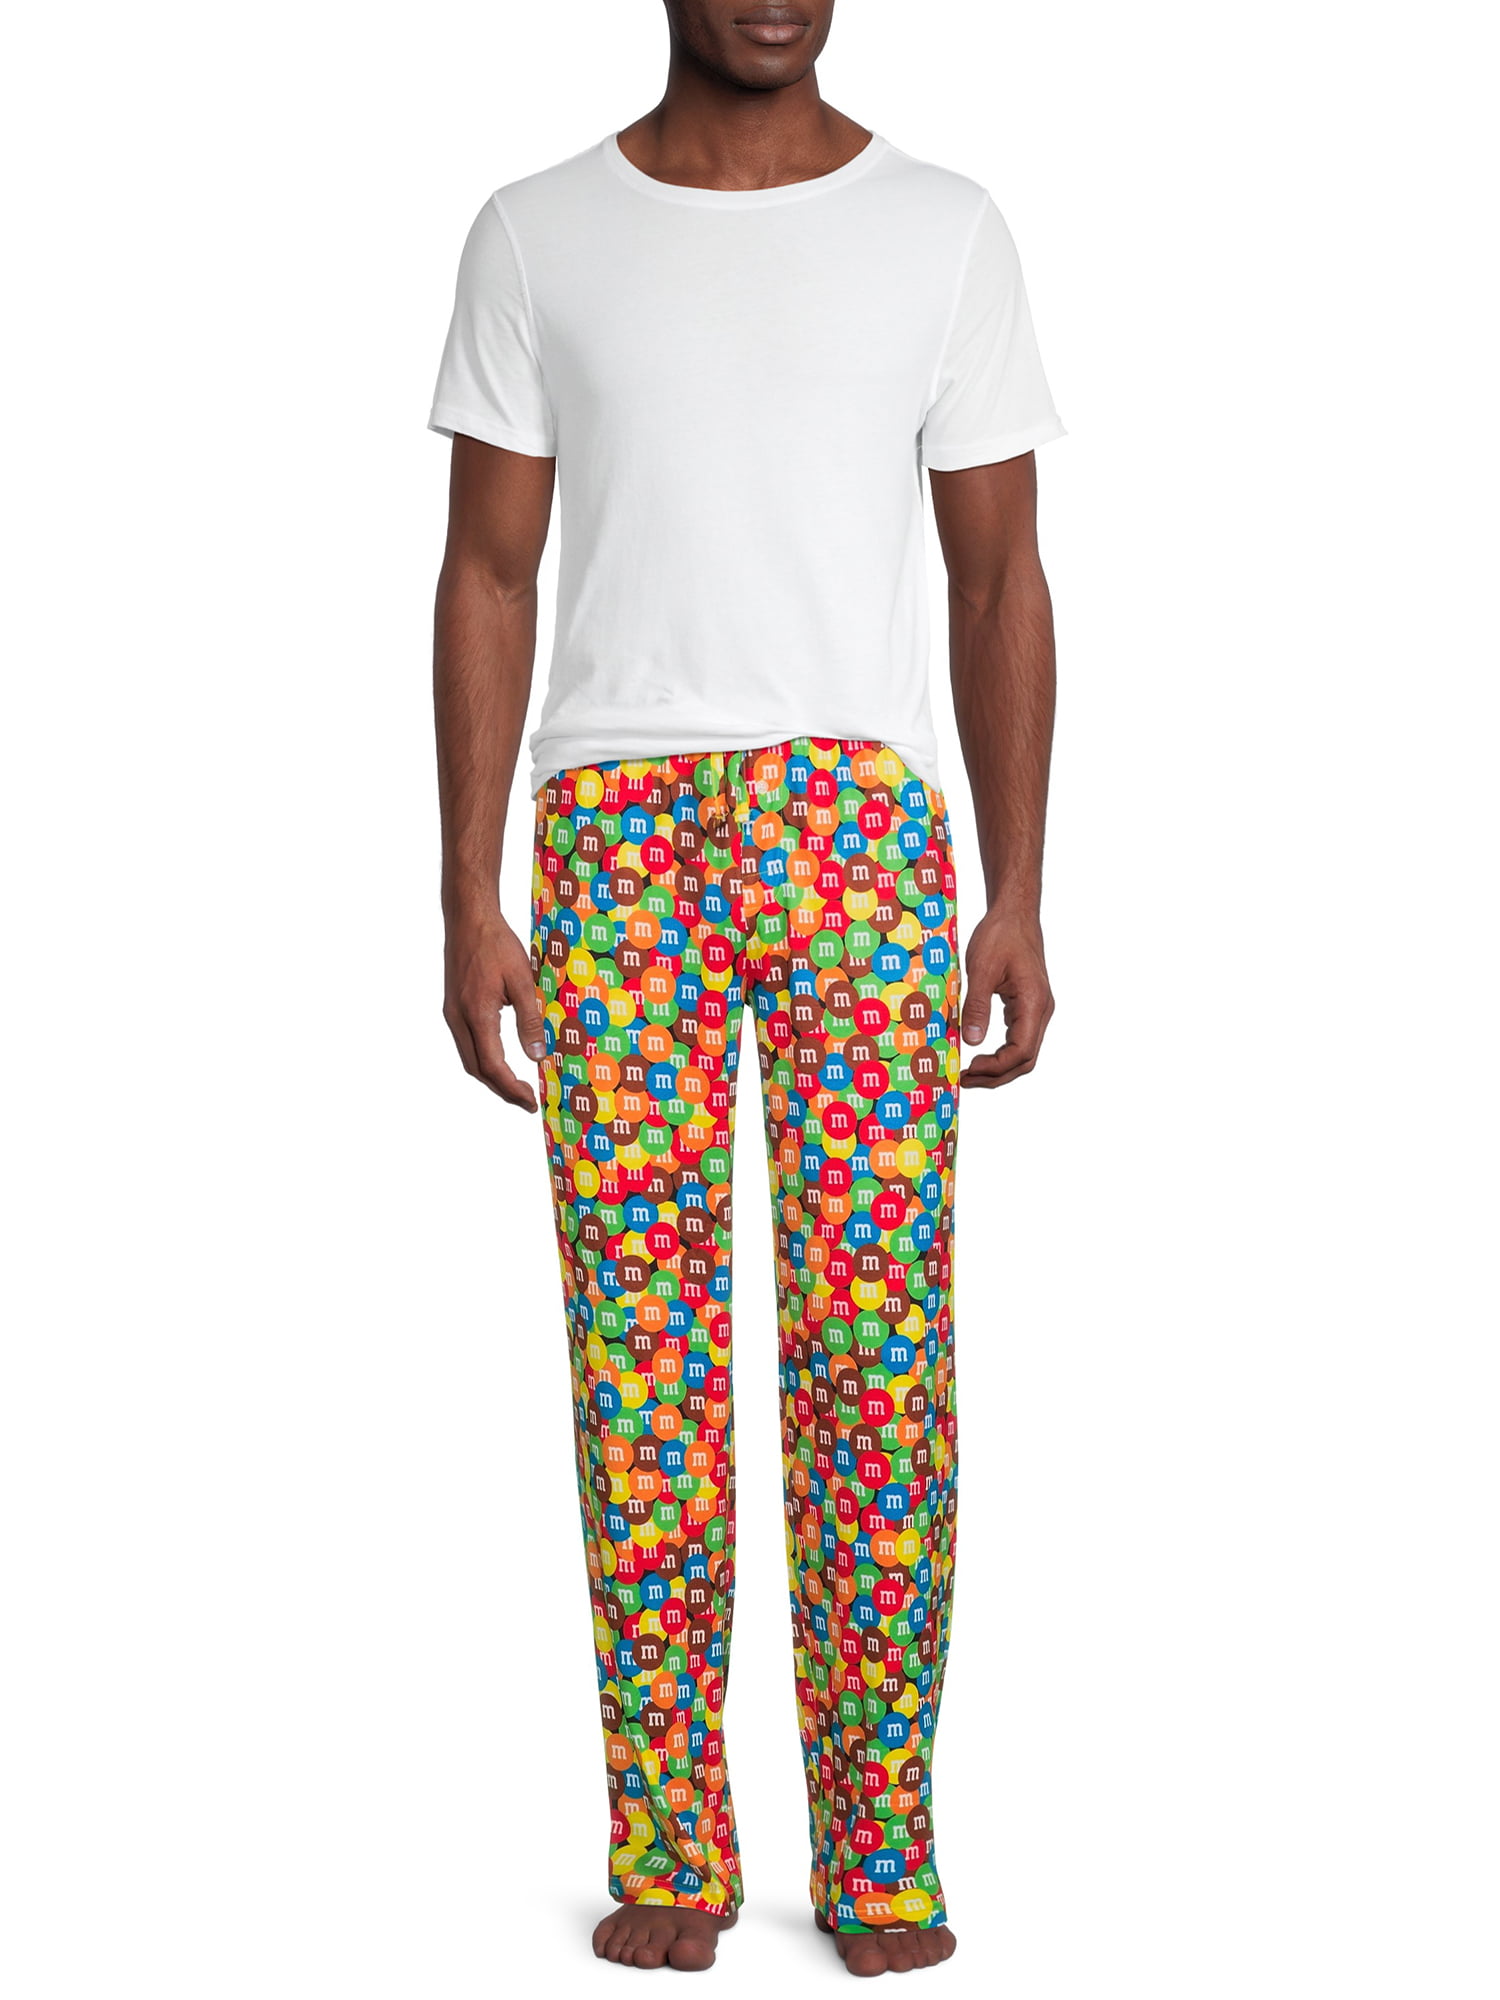 dier meerderheid Snikken M&M's, Adult Mens, Rainbow Logo Lounge Pajamas Sleep Pants, Sizes S-XL -  Walmart.com